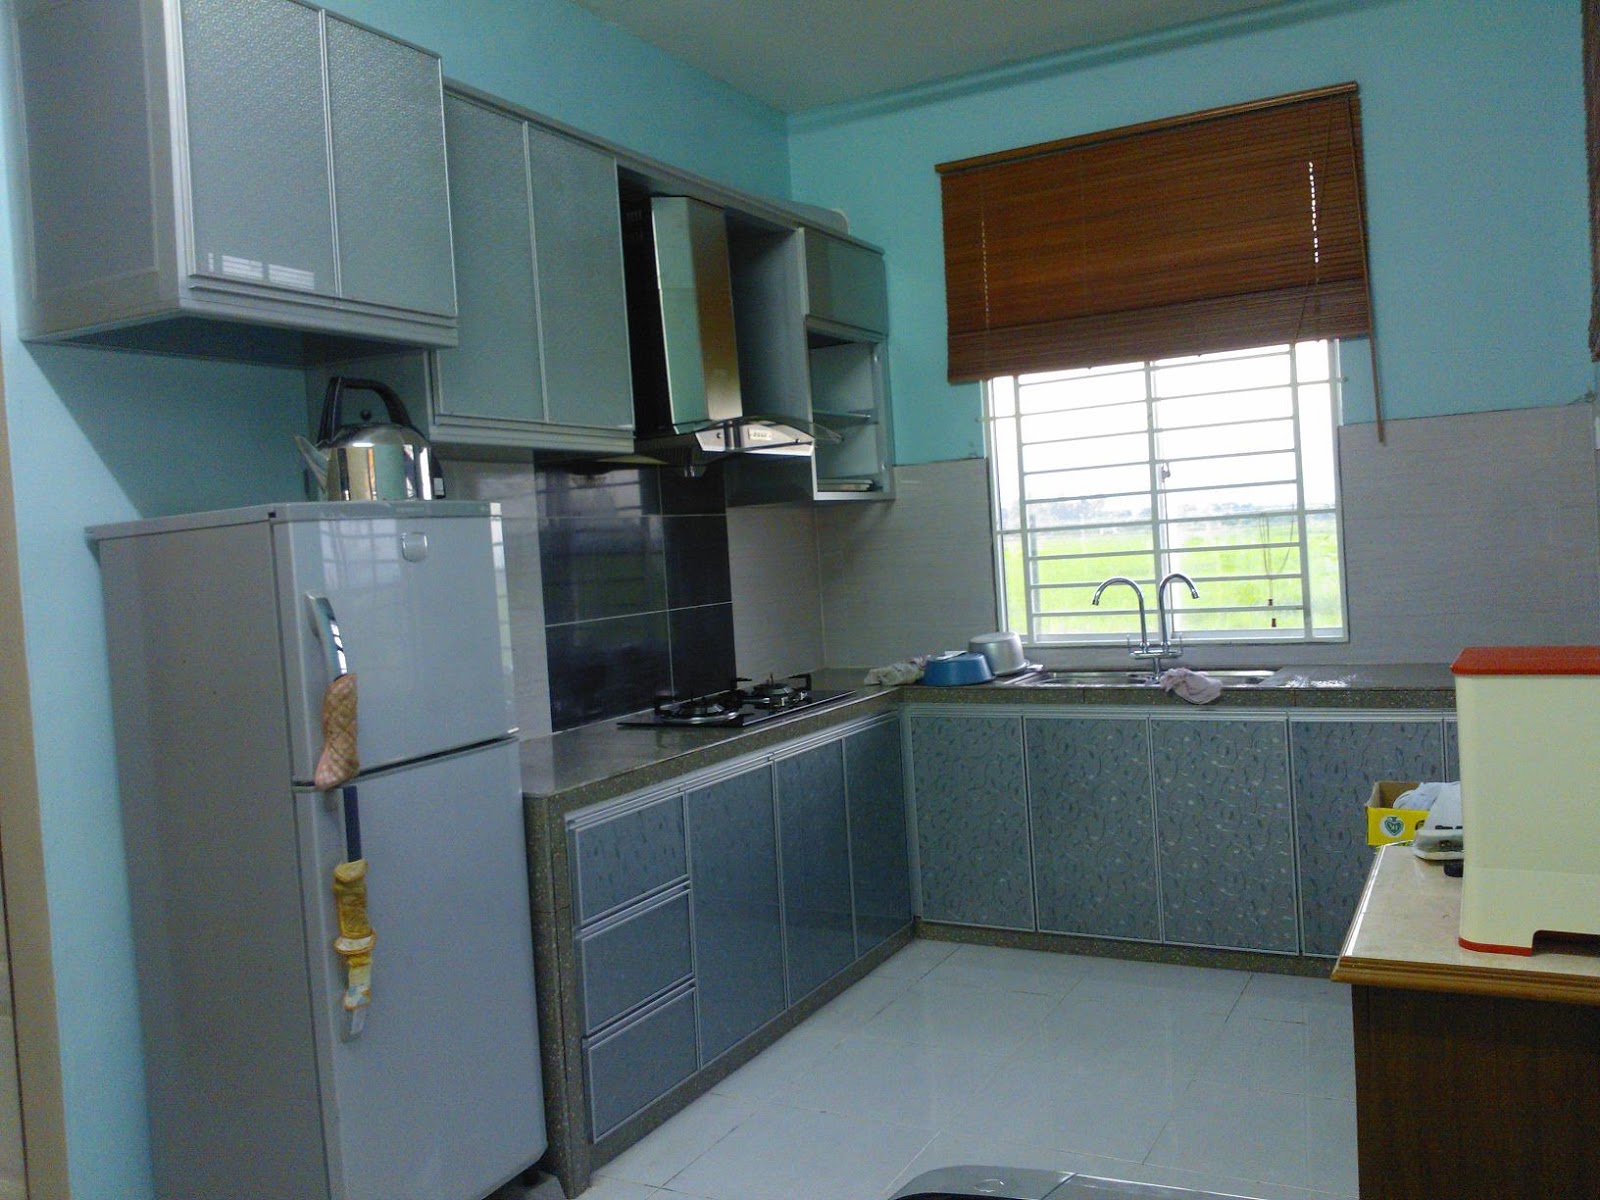 Dapur Minimalis Dengan Lemari Warna Biru Desain Dapur Cantik Sederhana 1600x1200 Wallpaper Teahubio